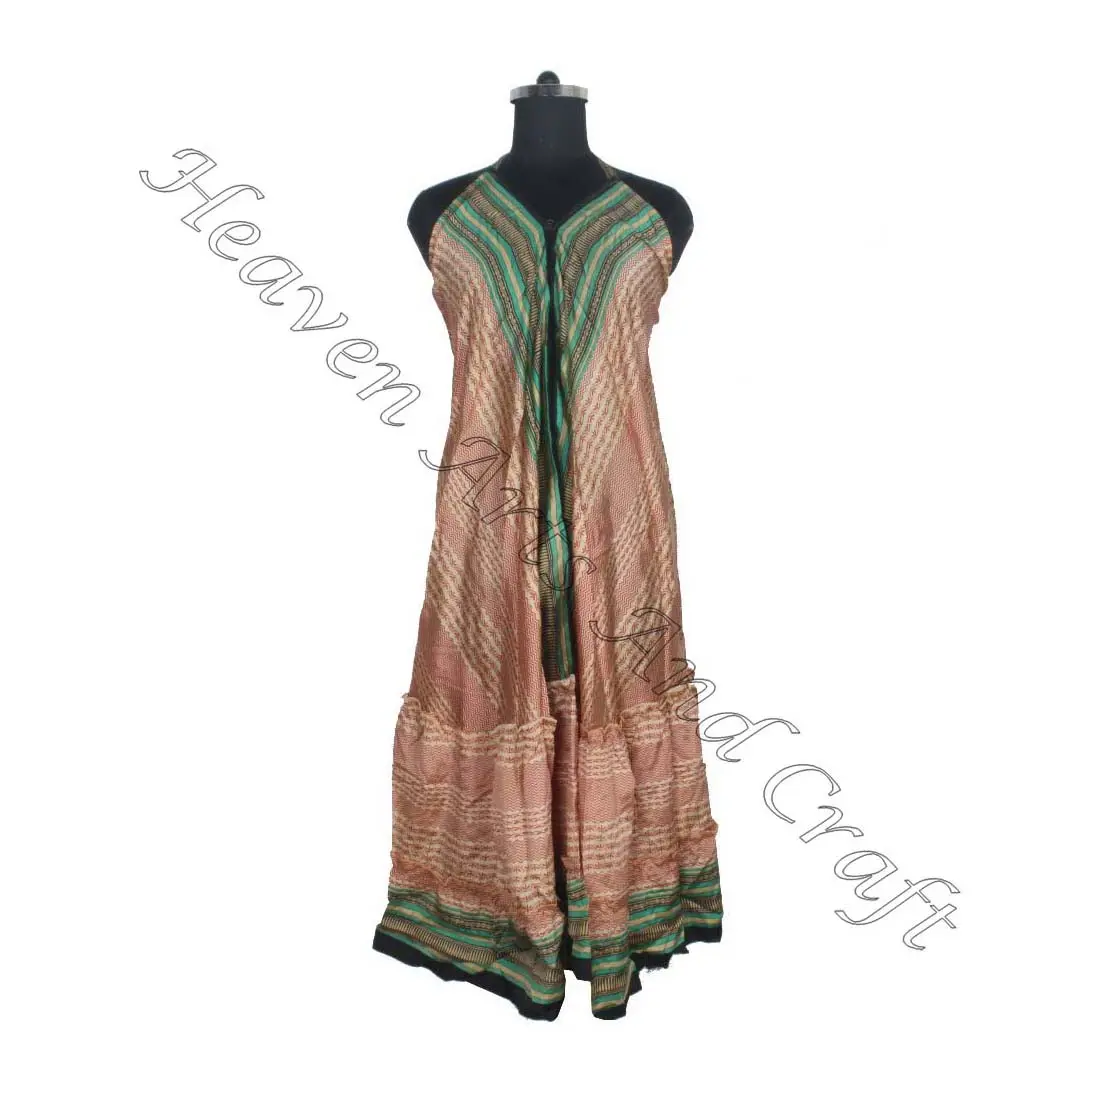 SD017 Saree / Sari / Shari Indian & Pakistani Clothing from India Hippy Boho Latest Traditional Long V-Neck Indian Vintage Sari